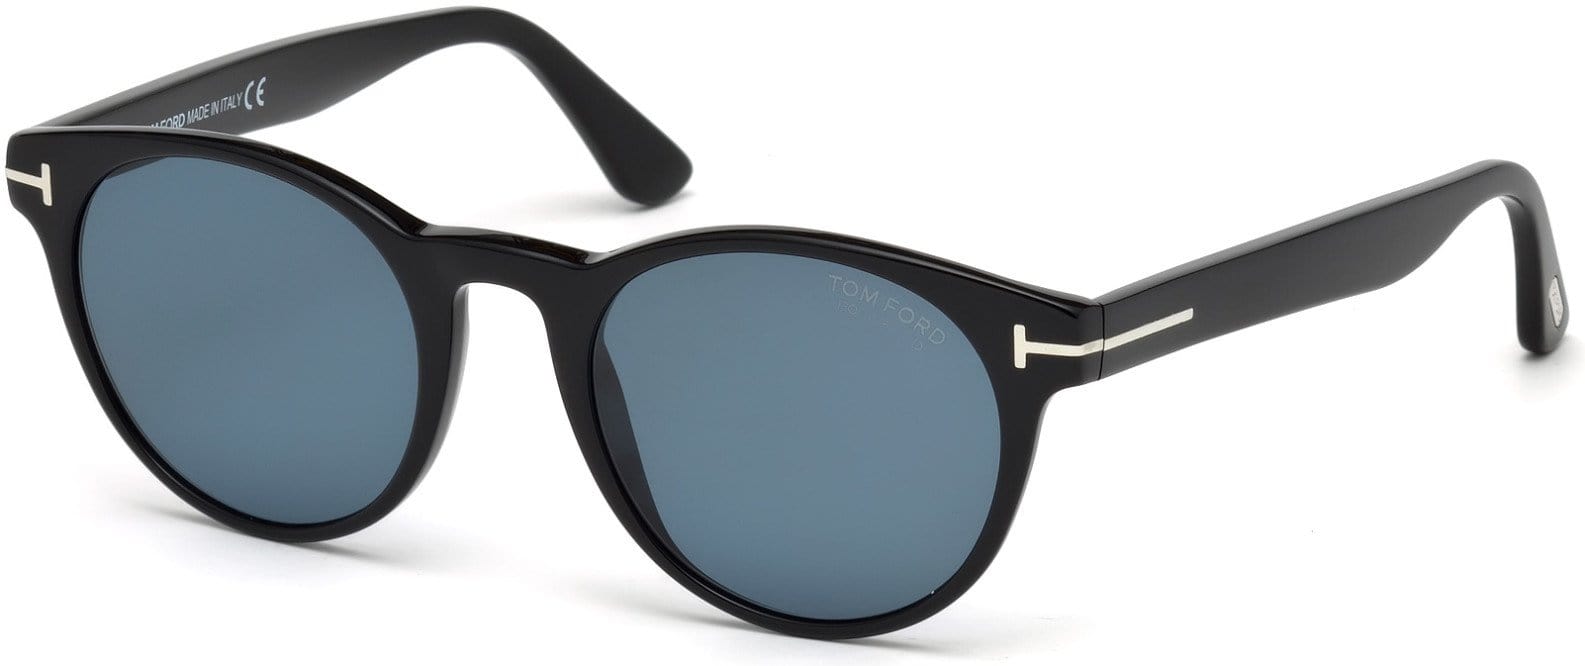 Tom Ford FT0522 Palmer Round Sunglasses 01V-01V - Shiny Black  / Blue